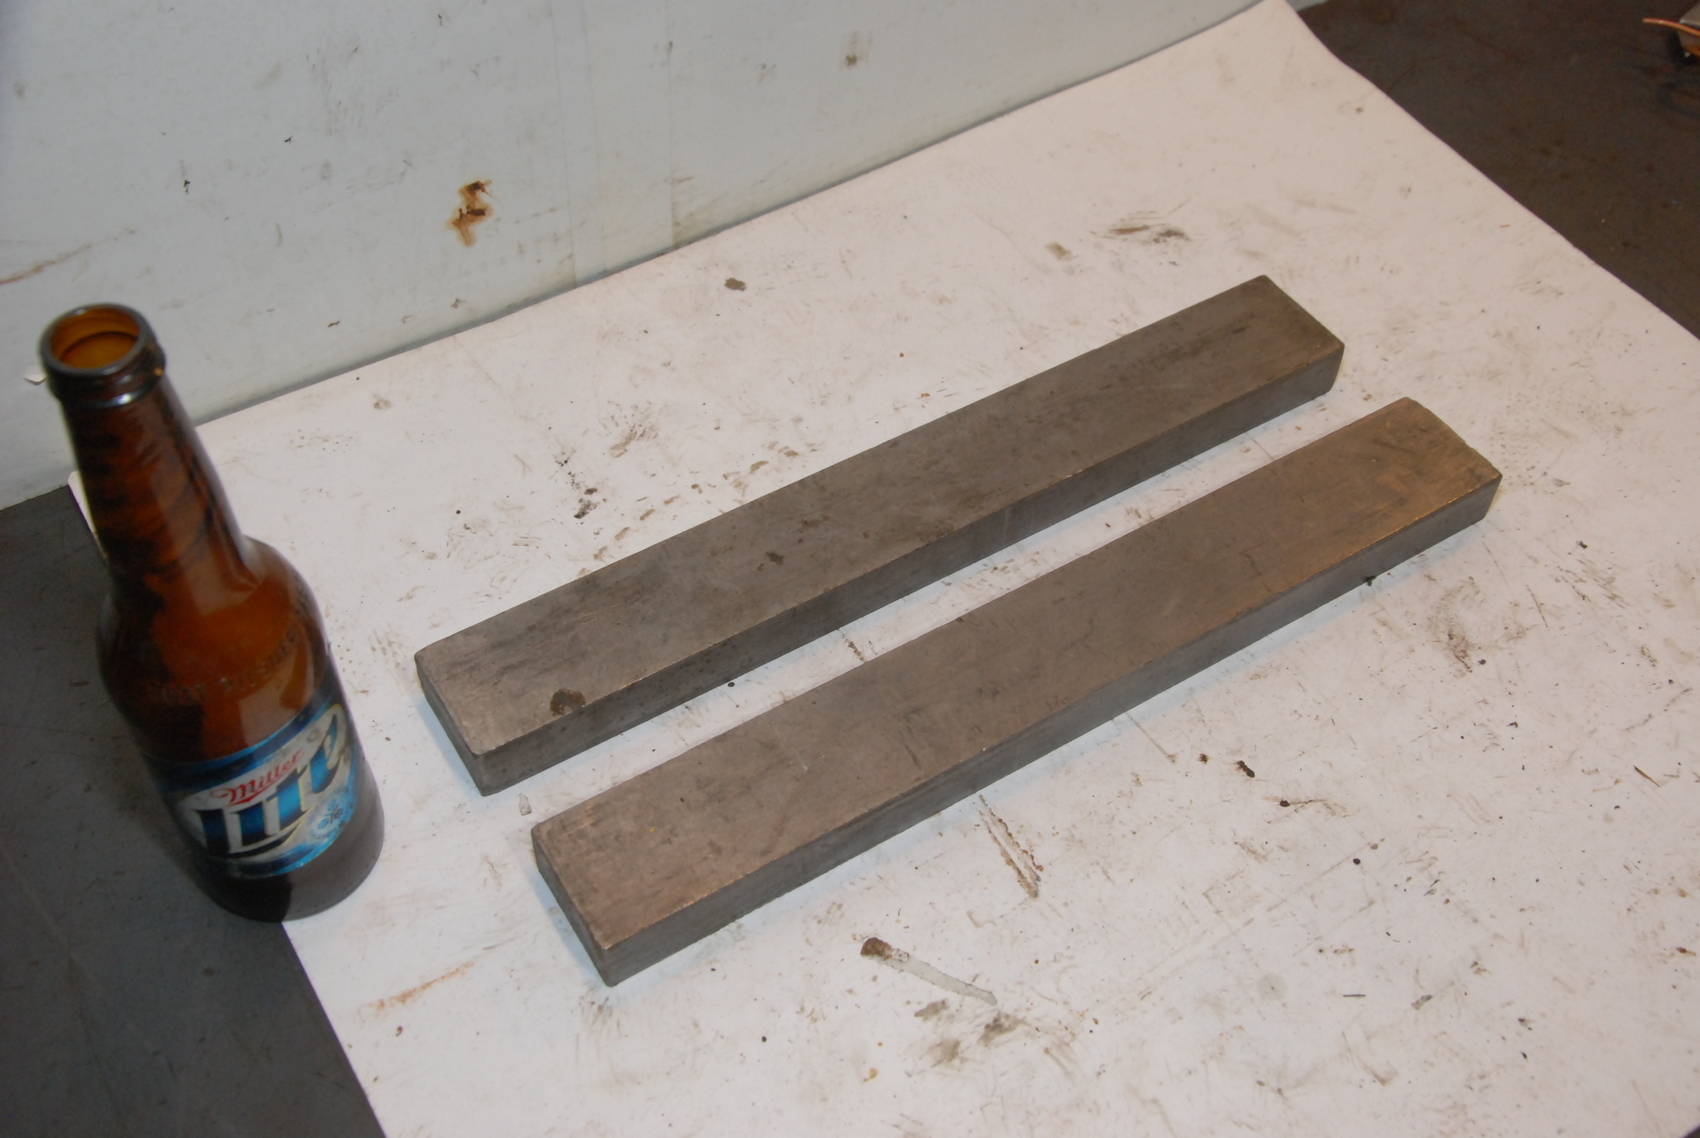 Lot of 2 steel Rectangular Bar for blacksmith anvil,15*2*1,17 lbs